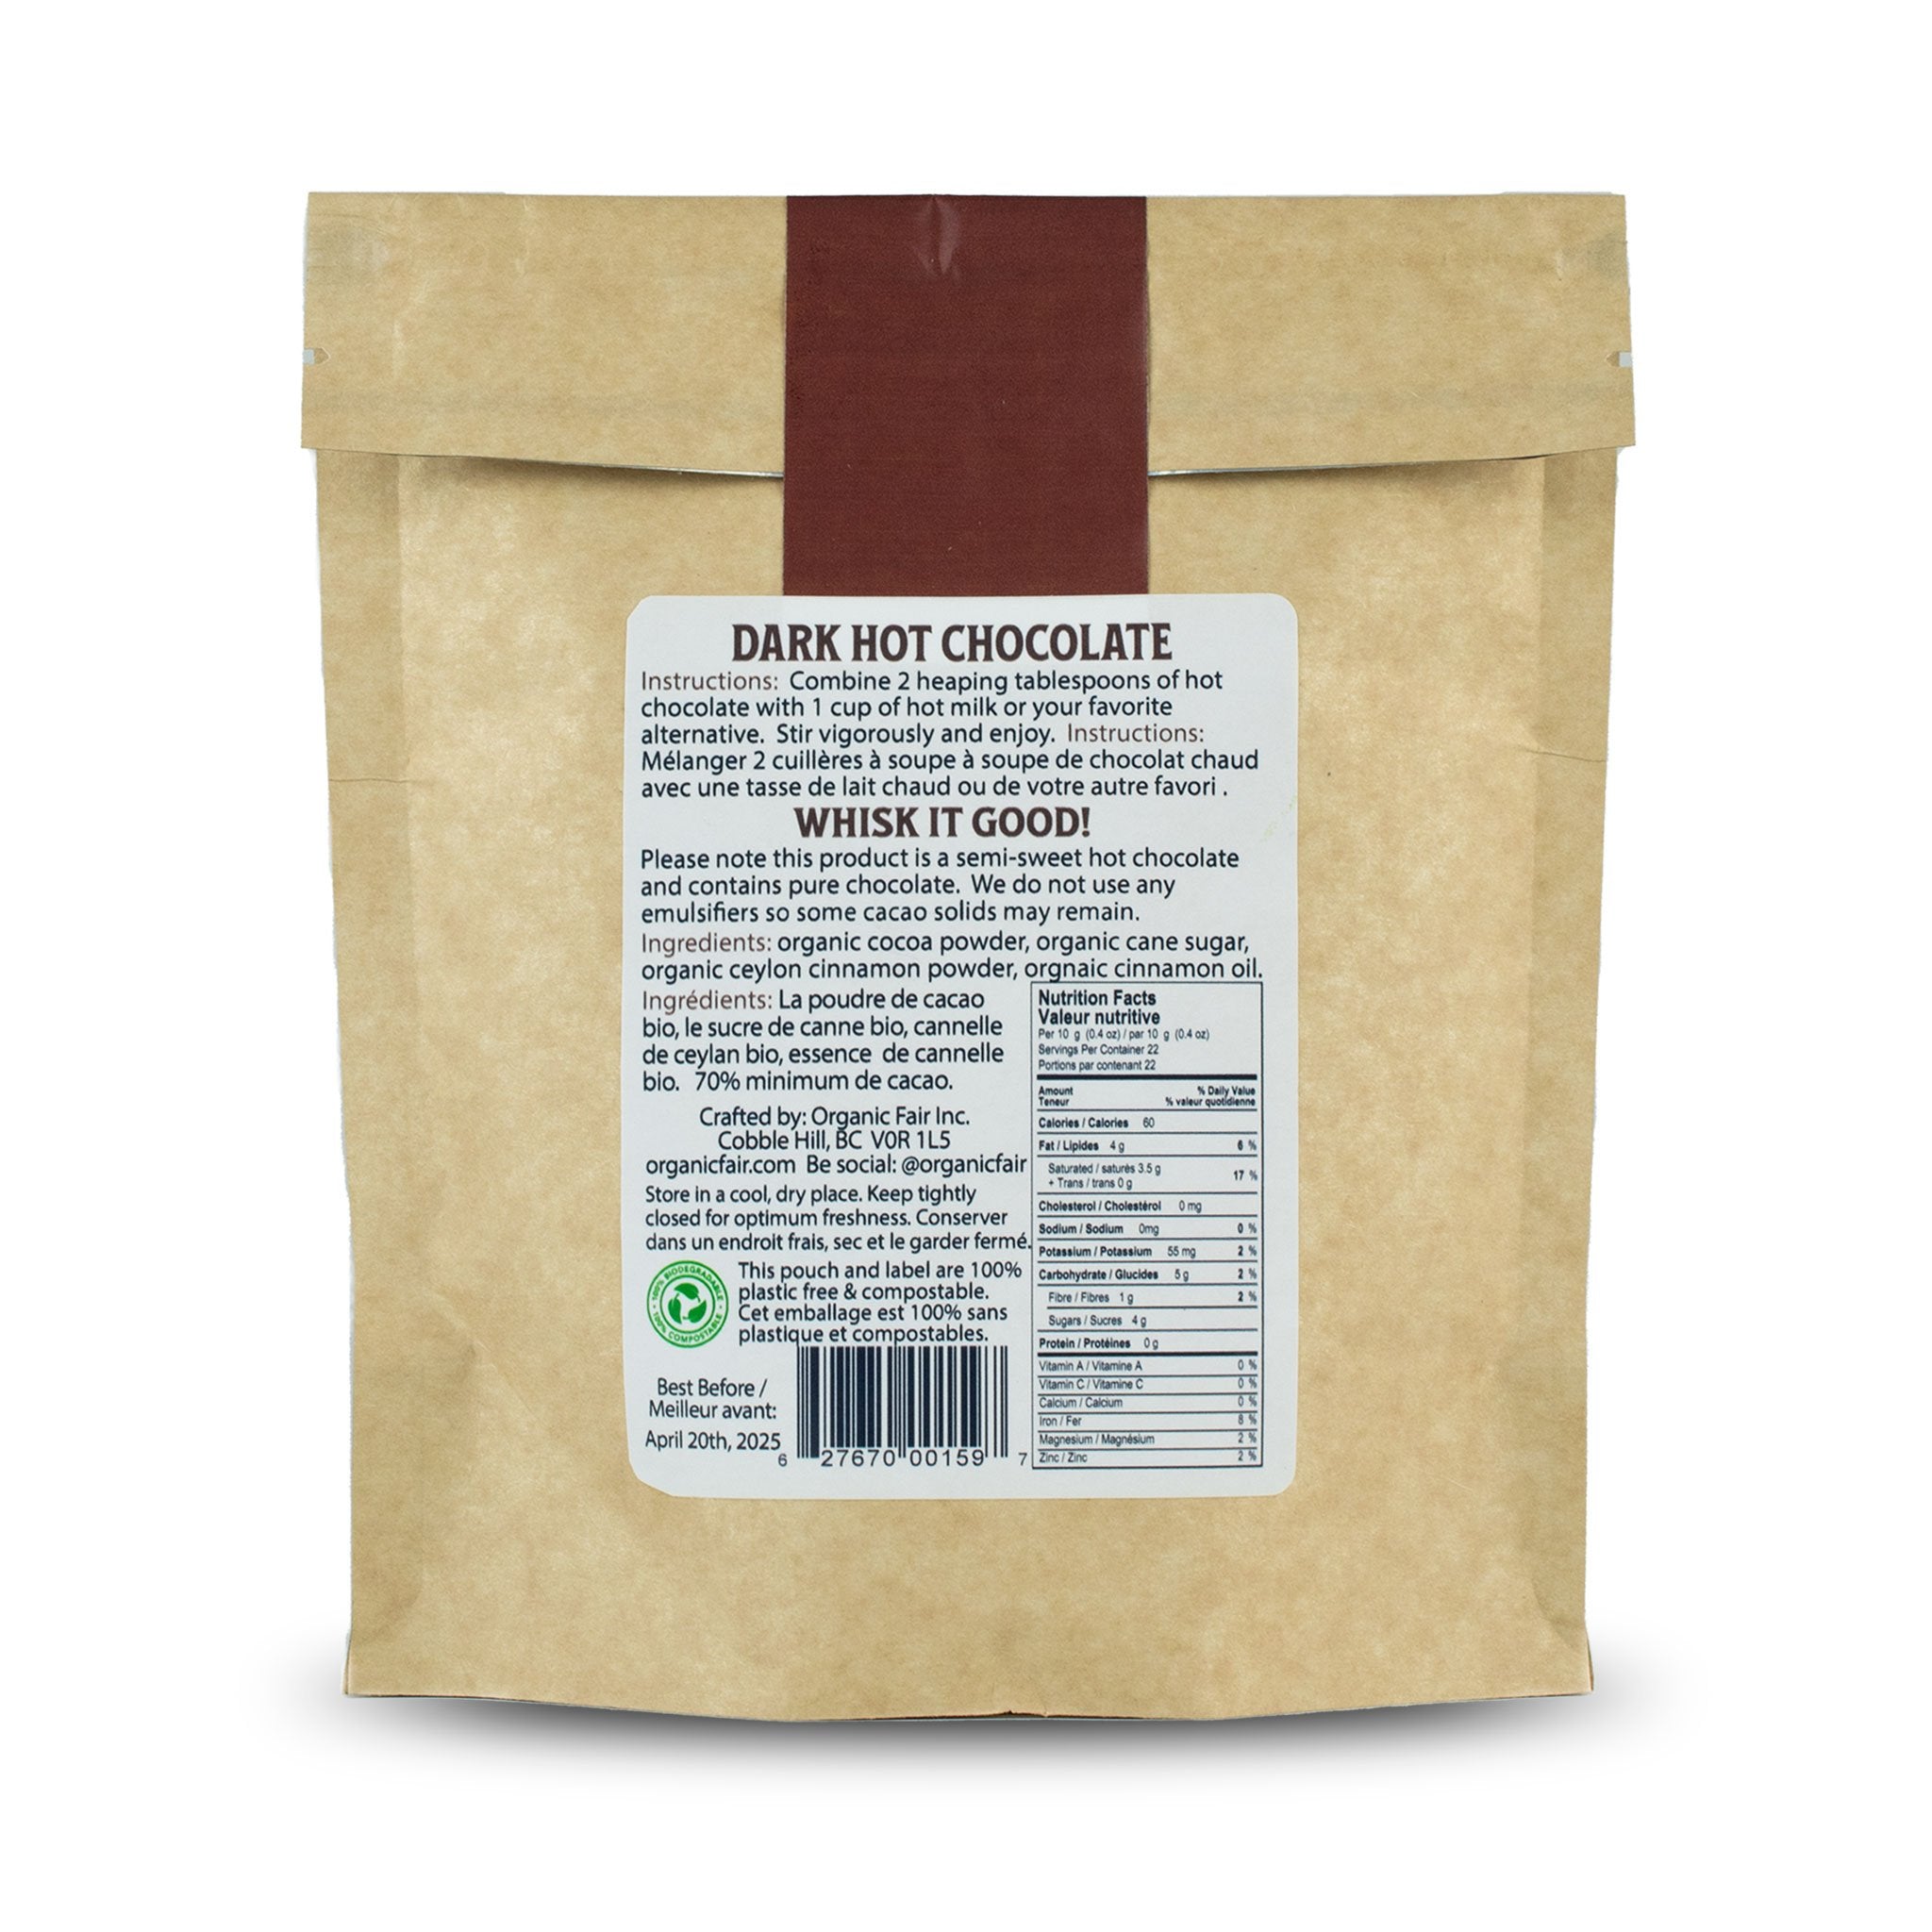 Dark Hot Chocolate - organicfair.com